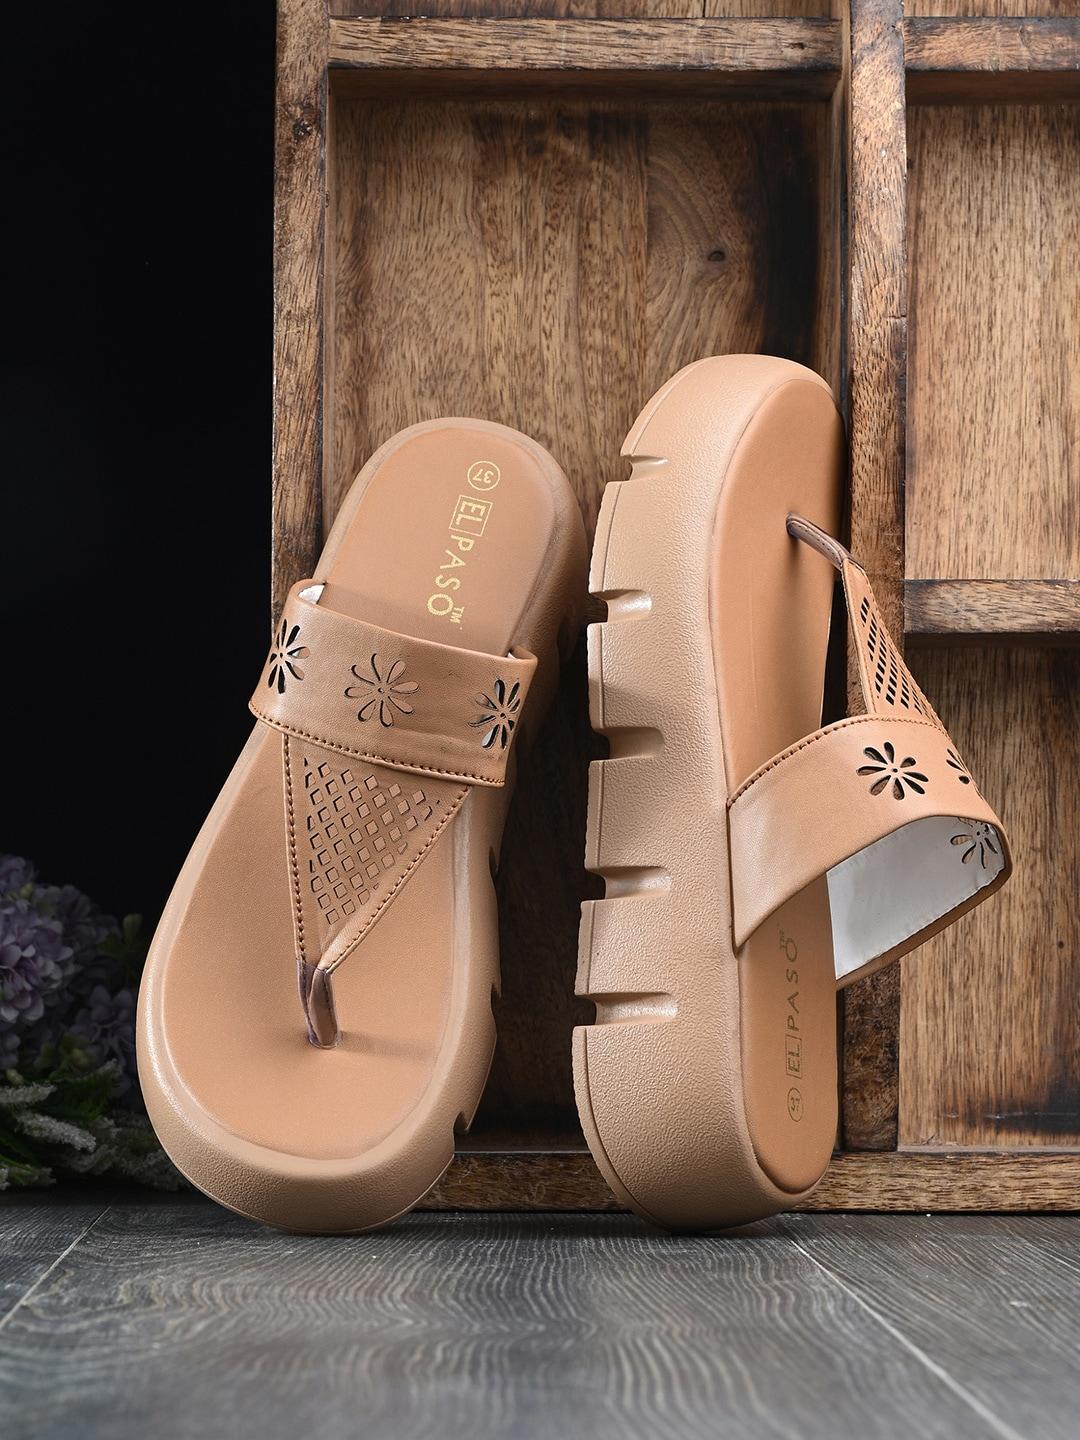 el-paso-textured-open-toe-flatform-heels-with-laser-cuts